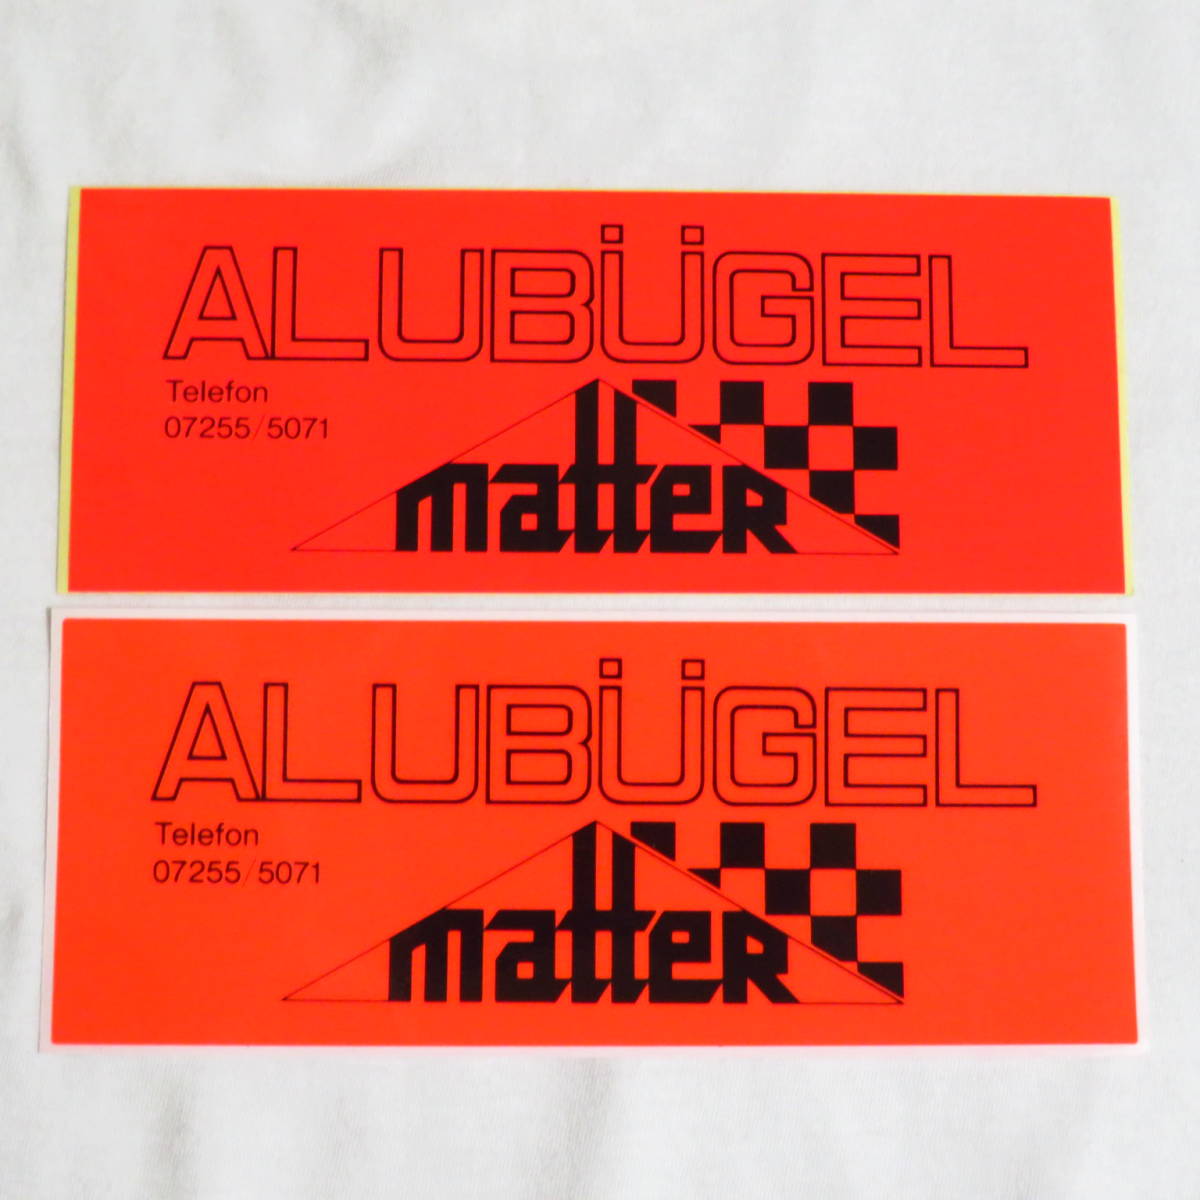 #MATTERmata- roll cage sticker fluorescence orange replica goods 2 pieces set Porsche 911 930 964 993 #